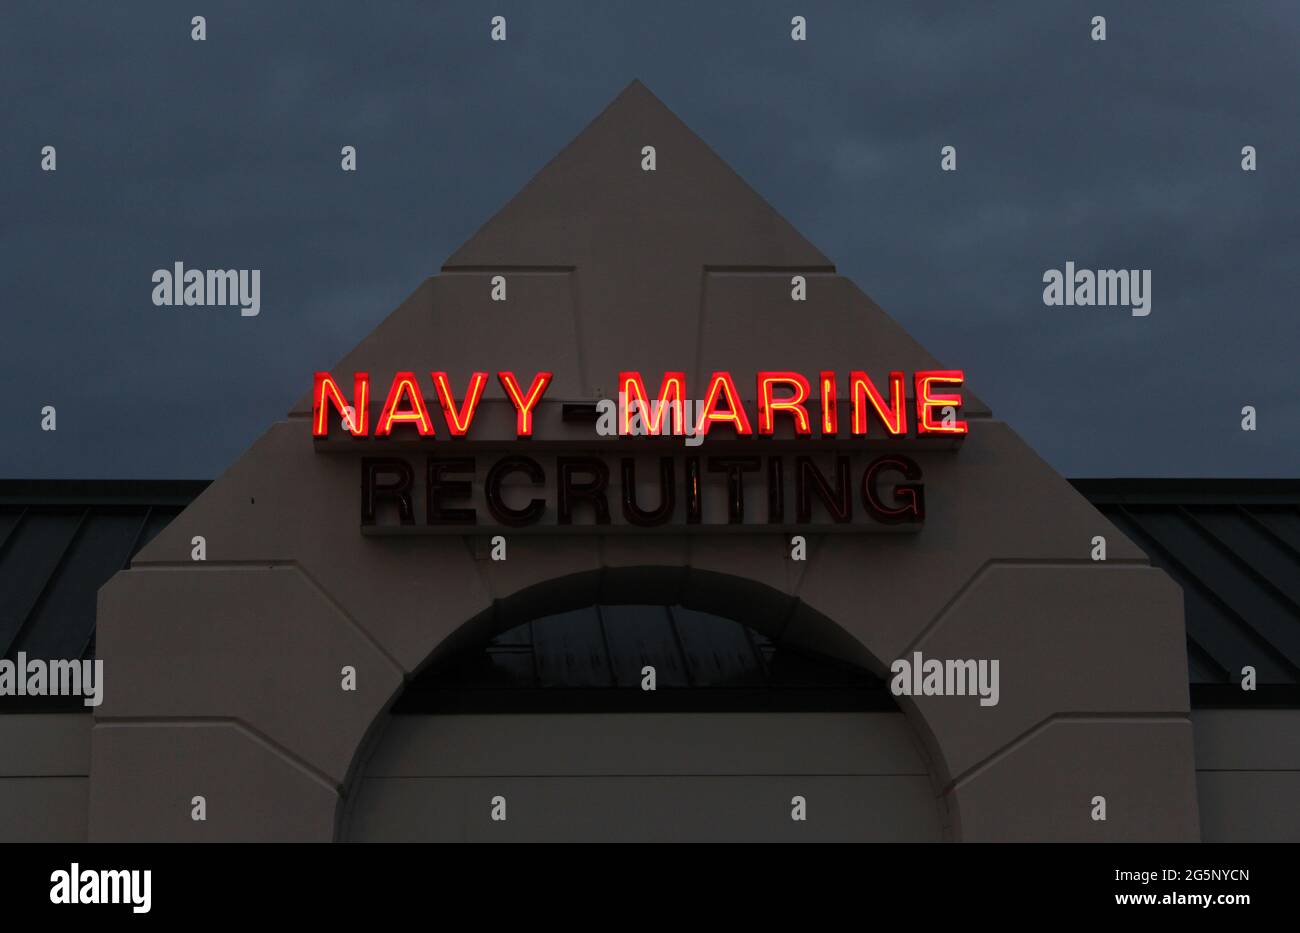 Navy Marine Recruiting Center on Dark Cloudy Day Stock Photo